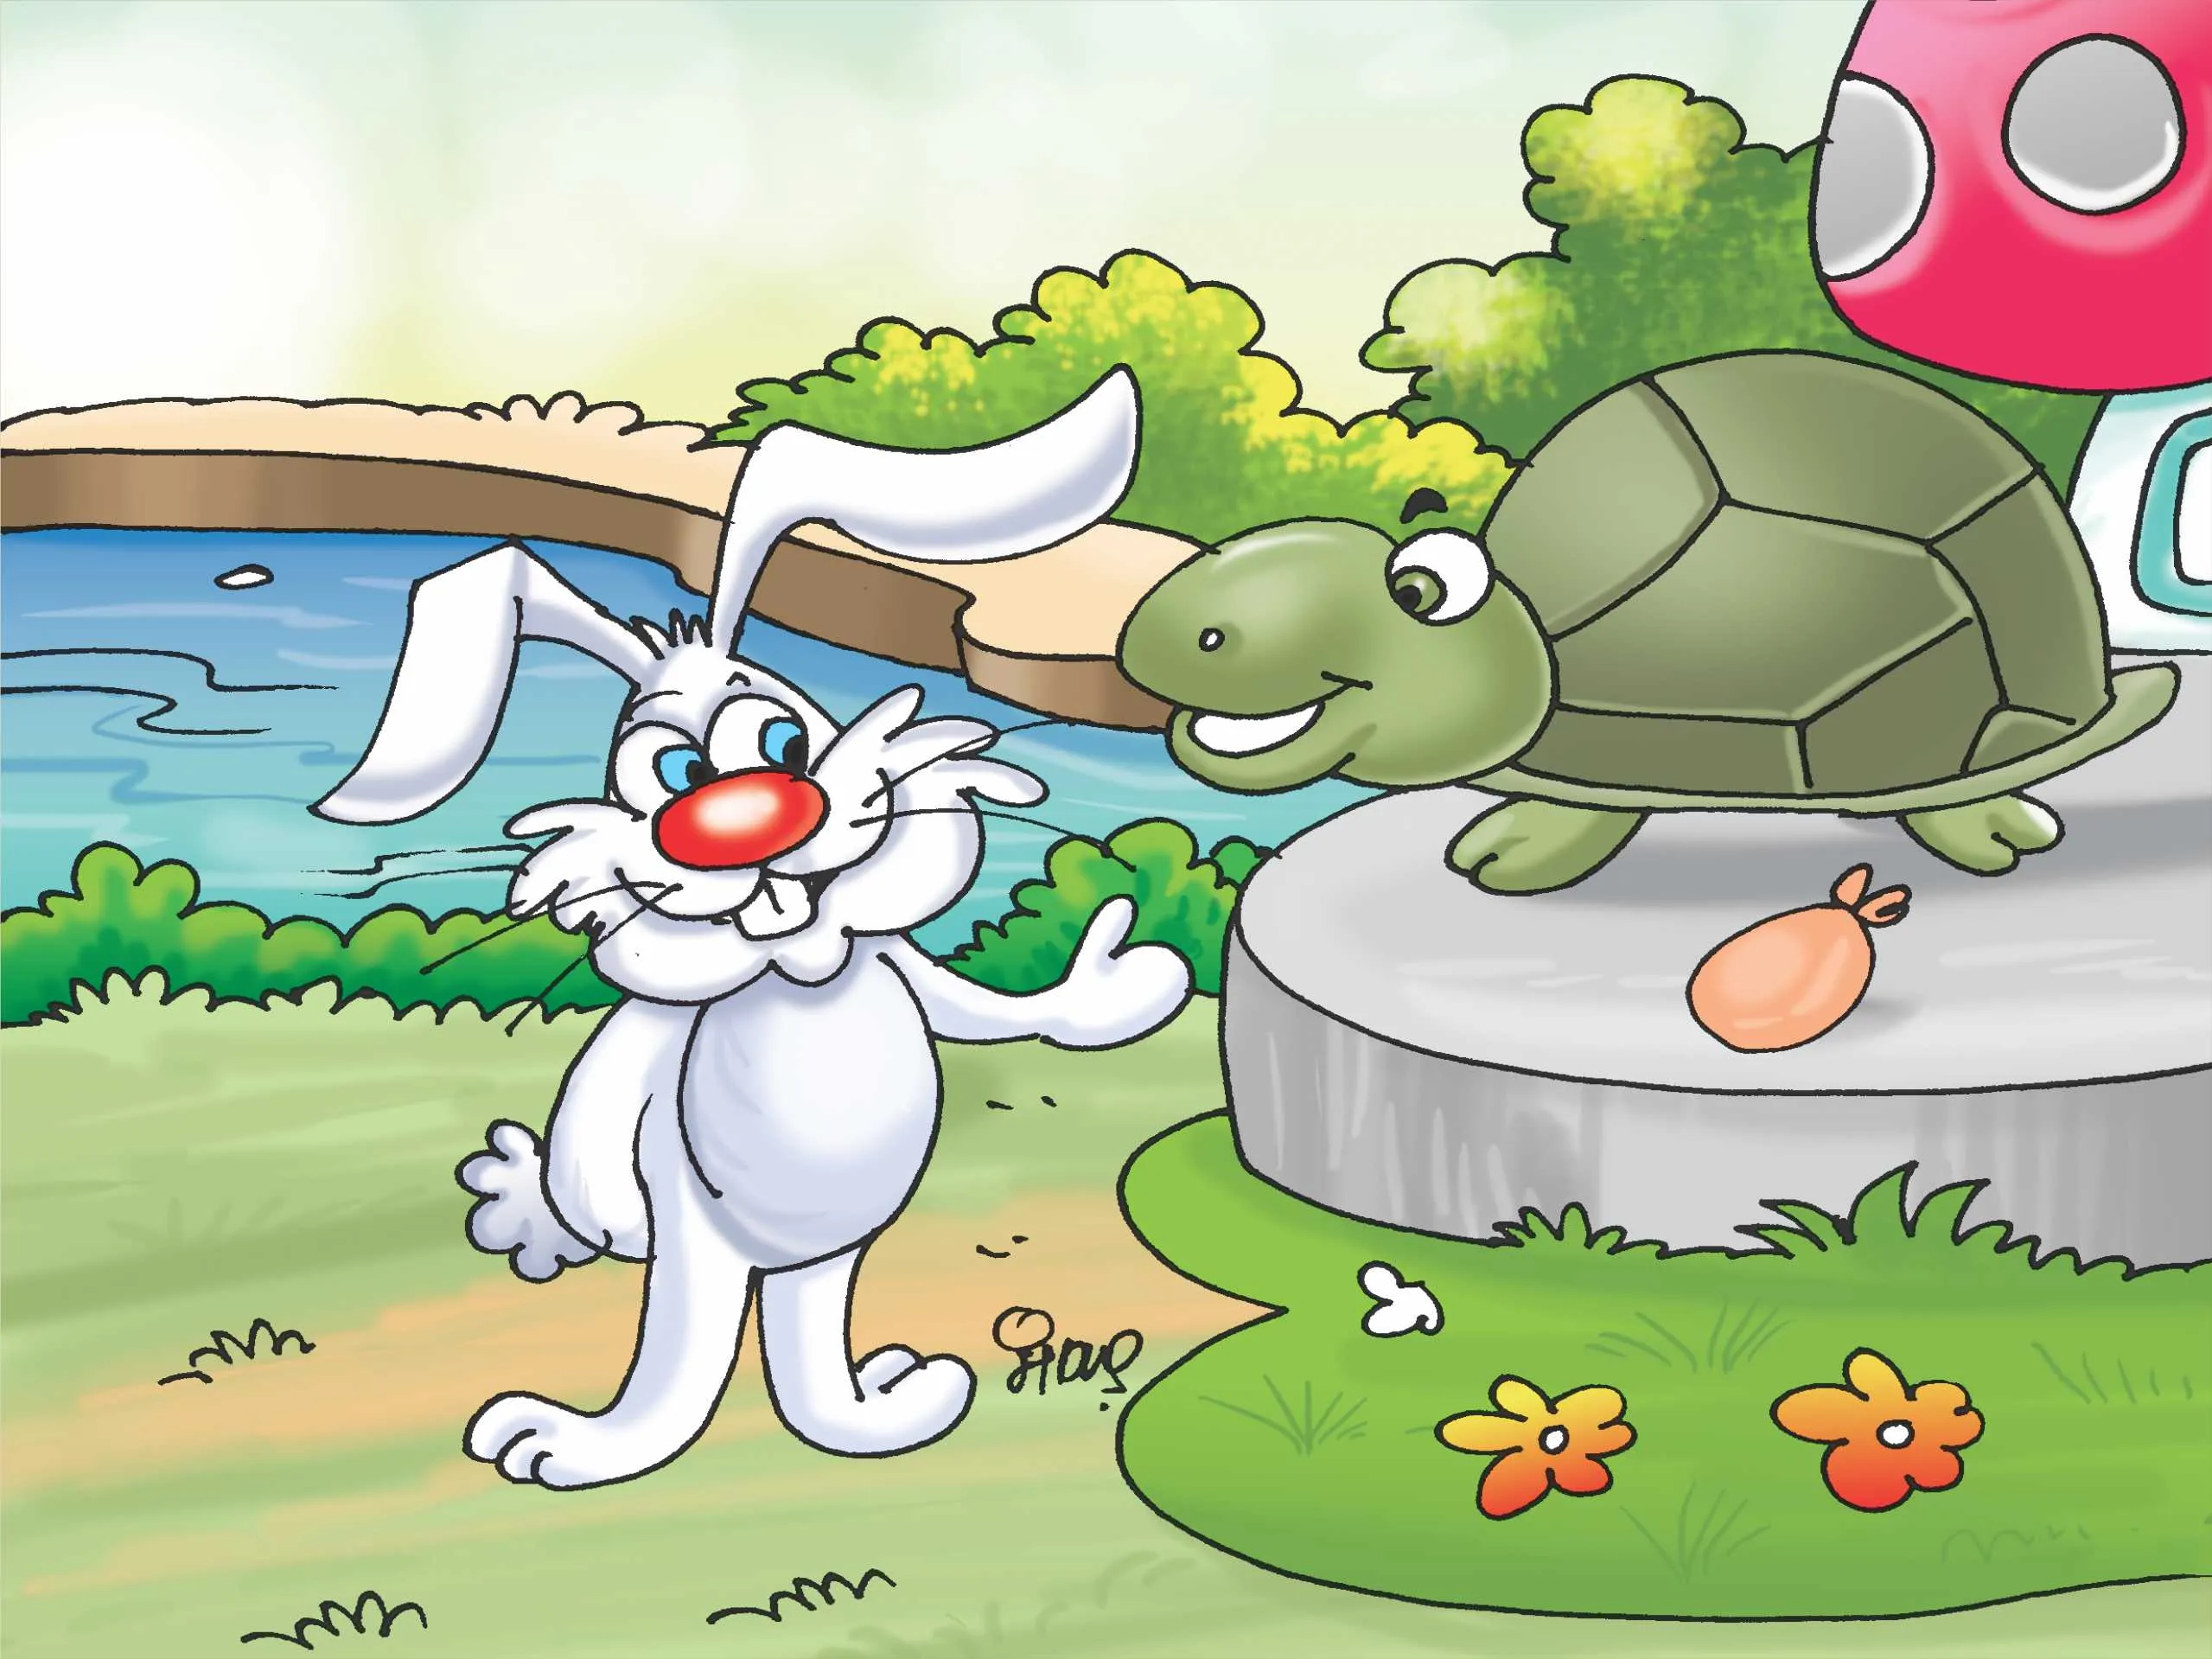 Turtle with rabbit Cartoon image